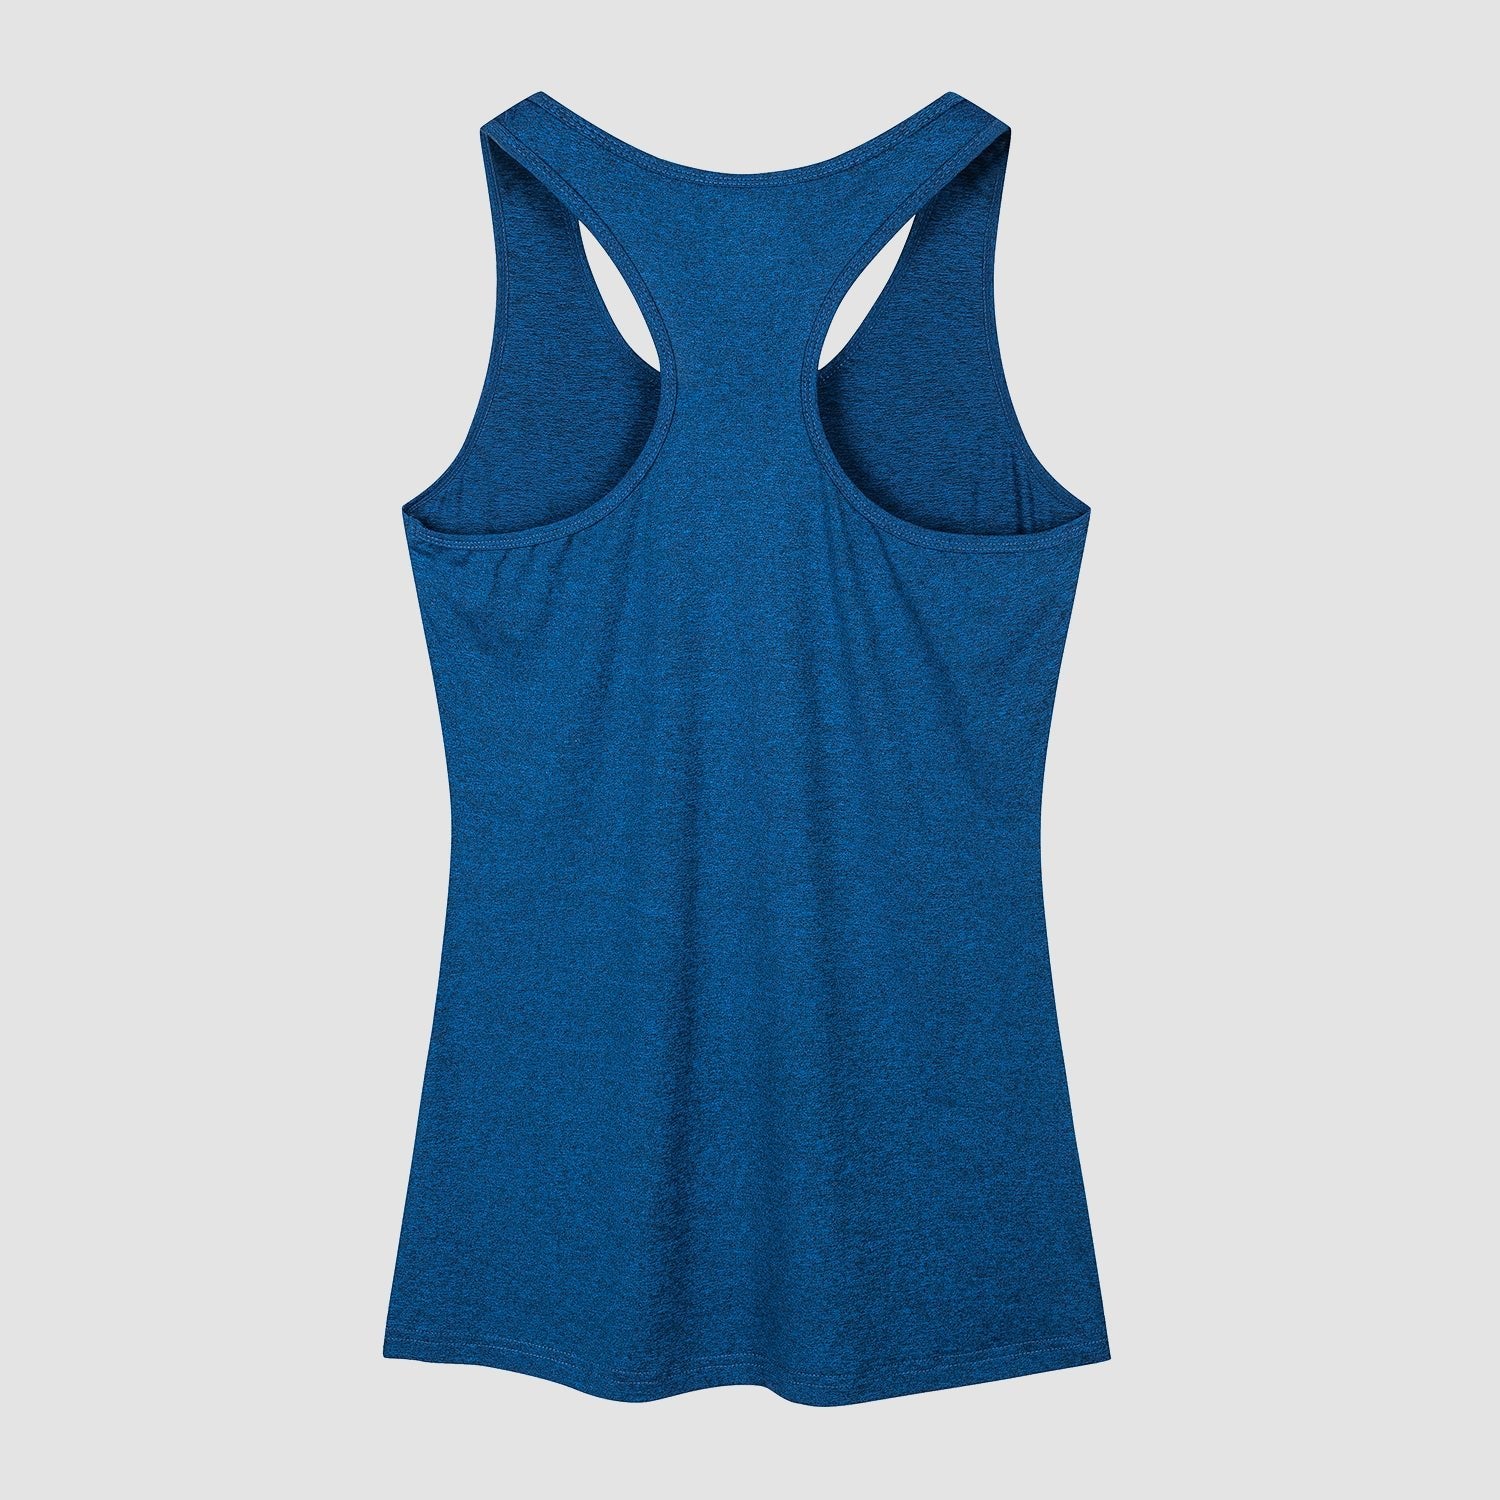 Women's Tank Top Quick Dry Athletic Tee Shirt Running Yoga